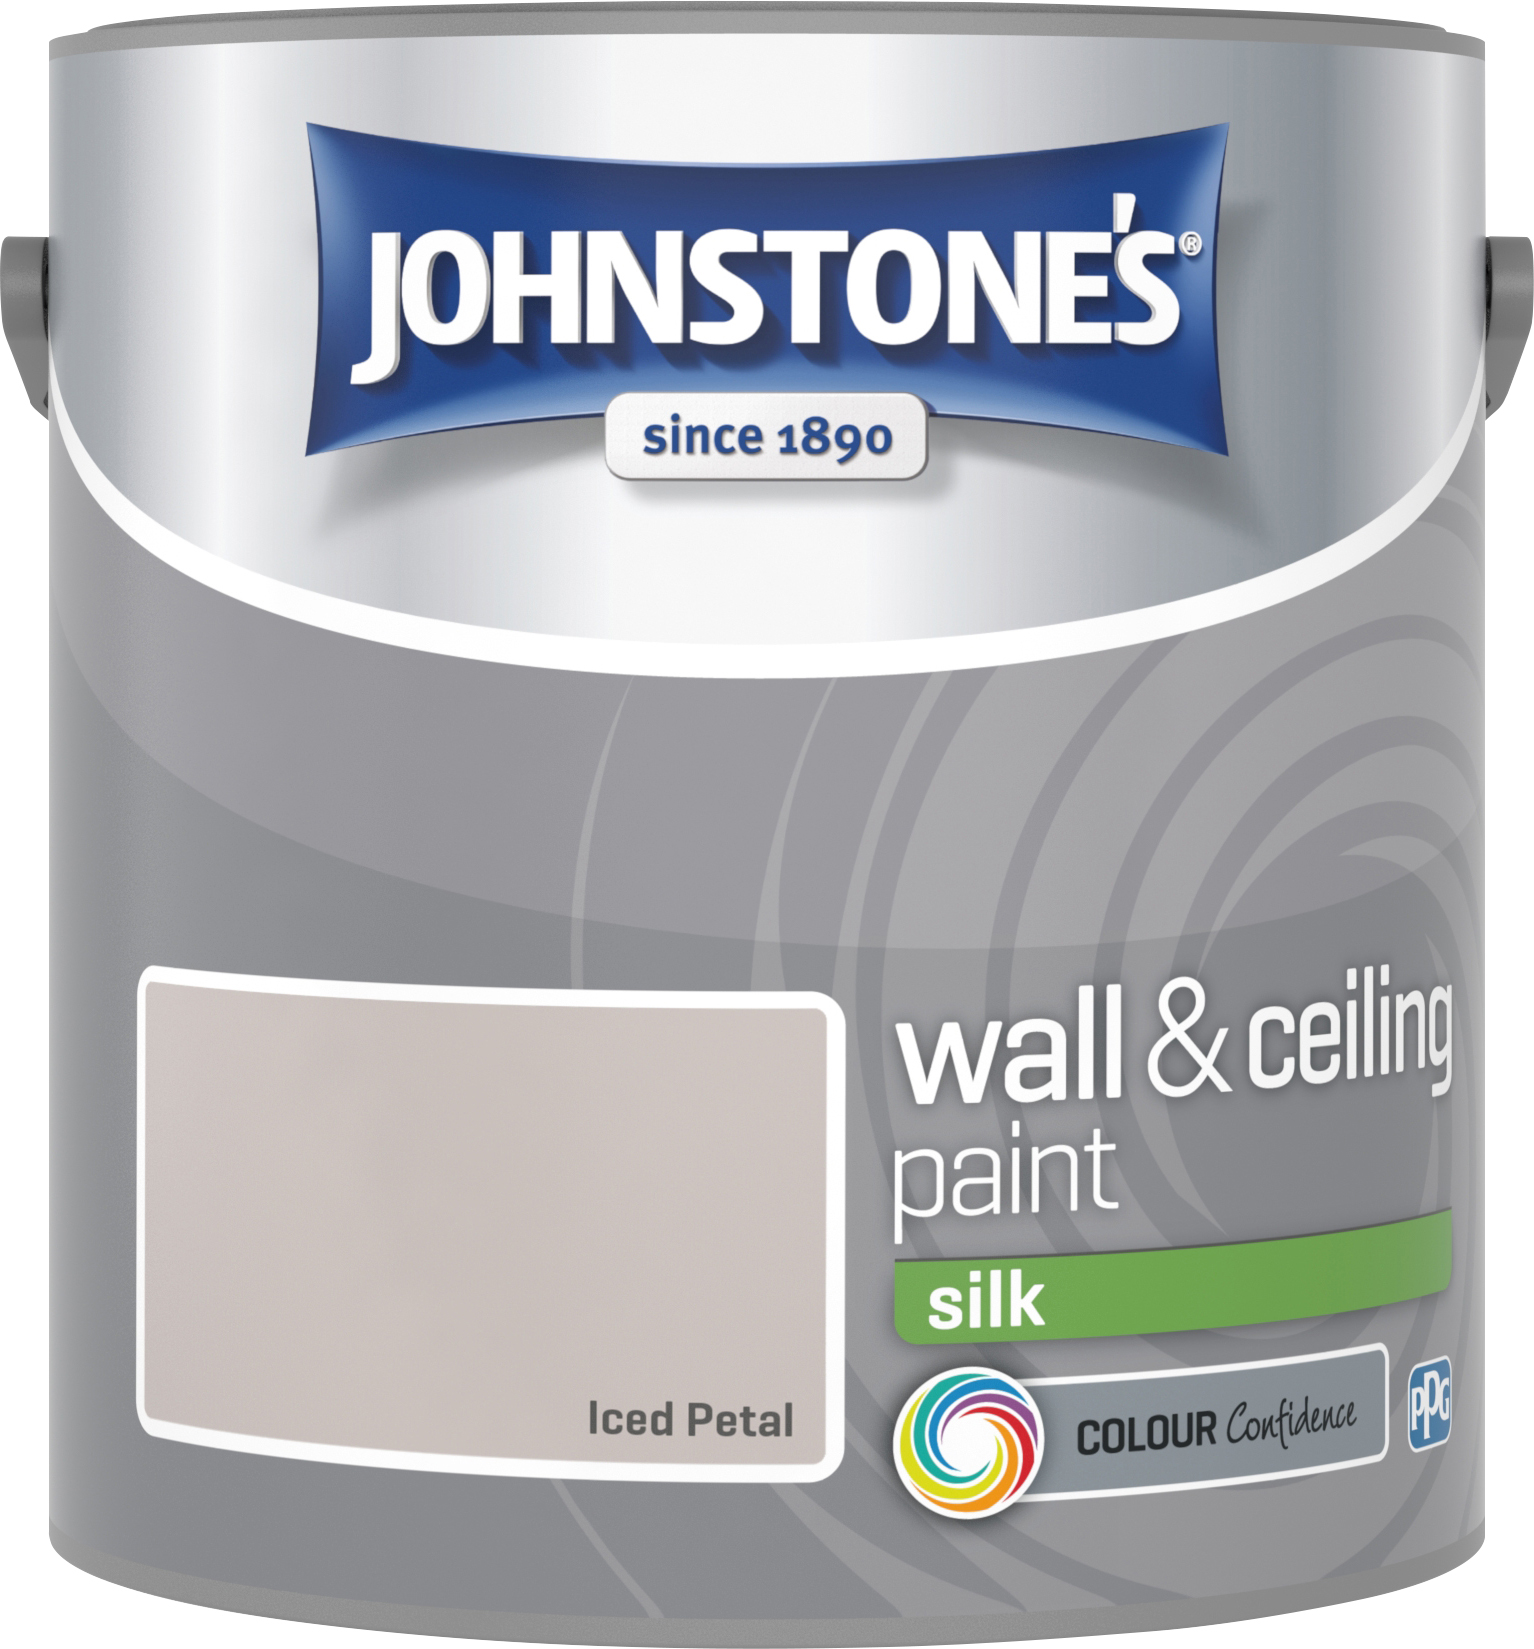 Johnstone's 306577 2.5 Litre Silk Emulsion Paint - Iced Petal